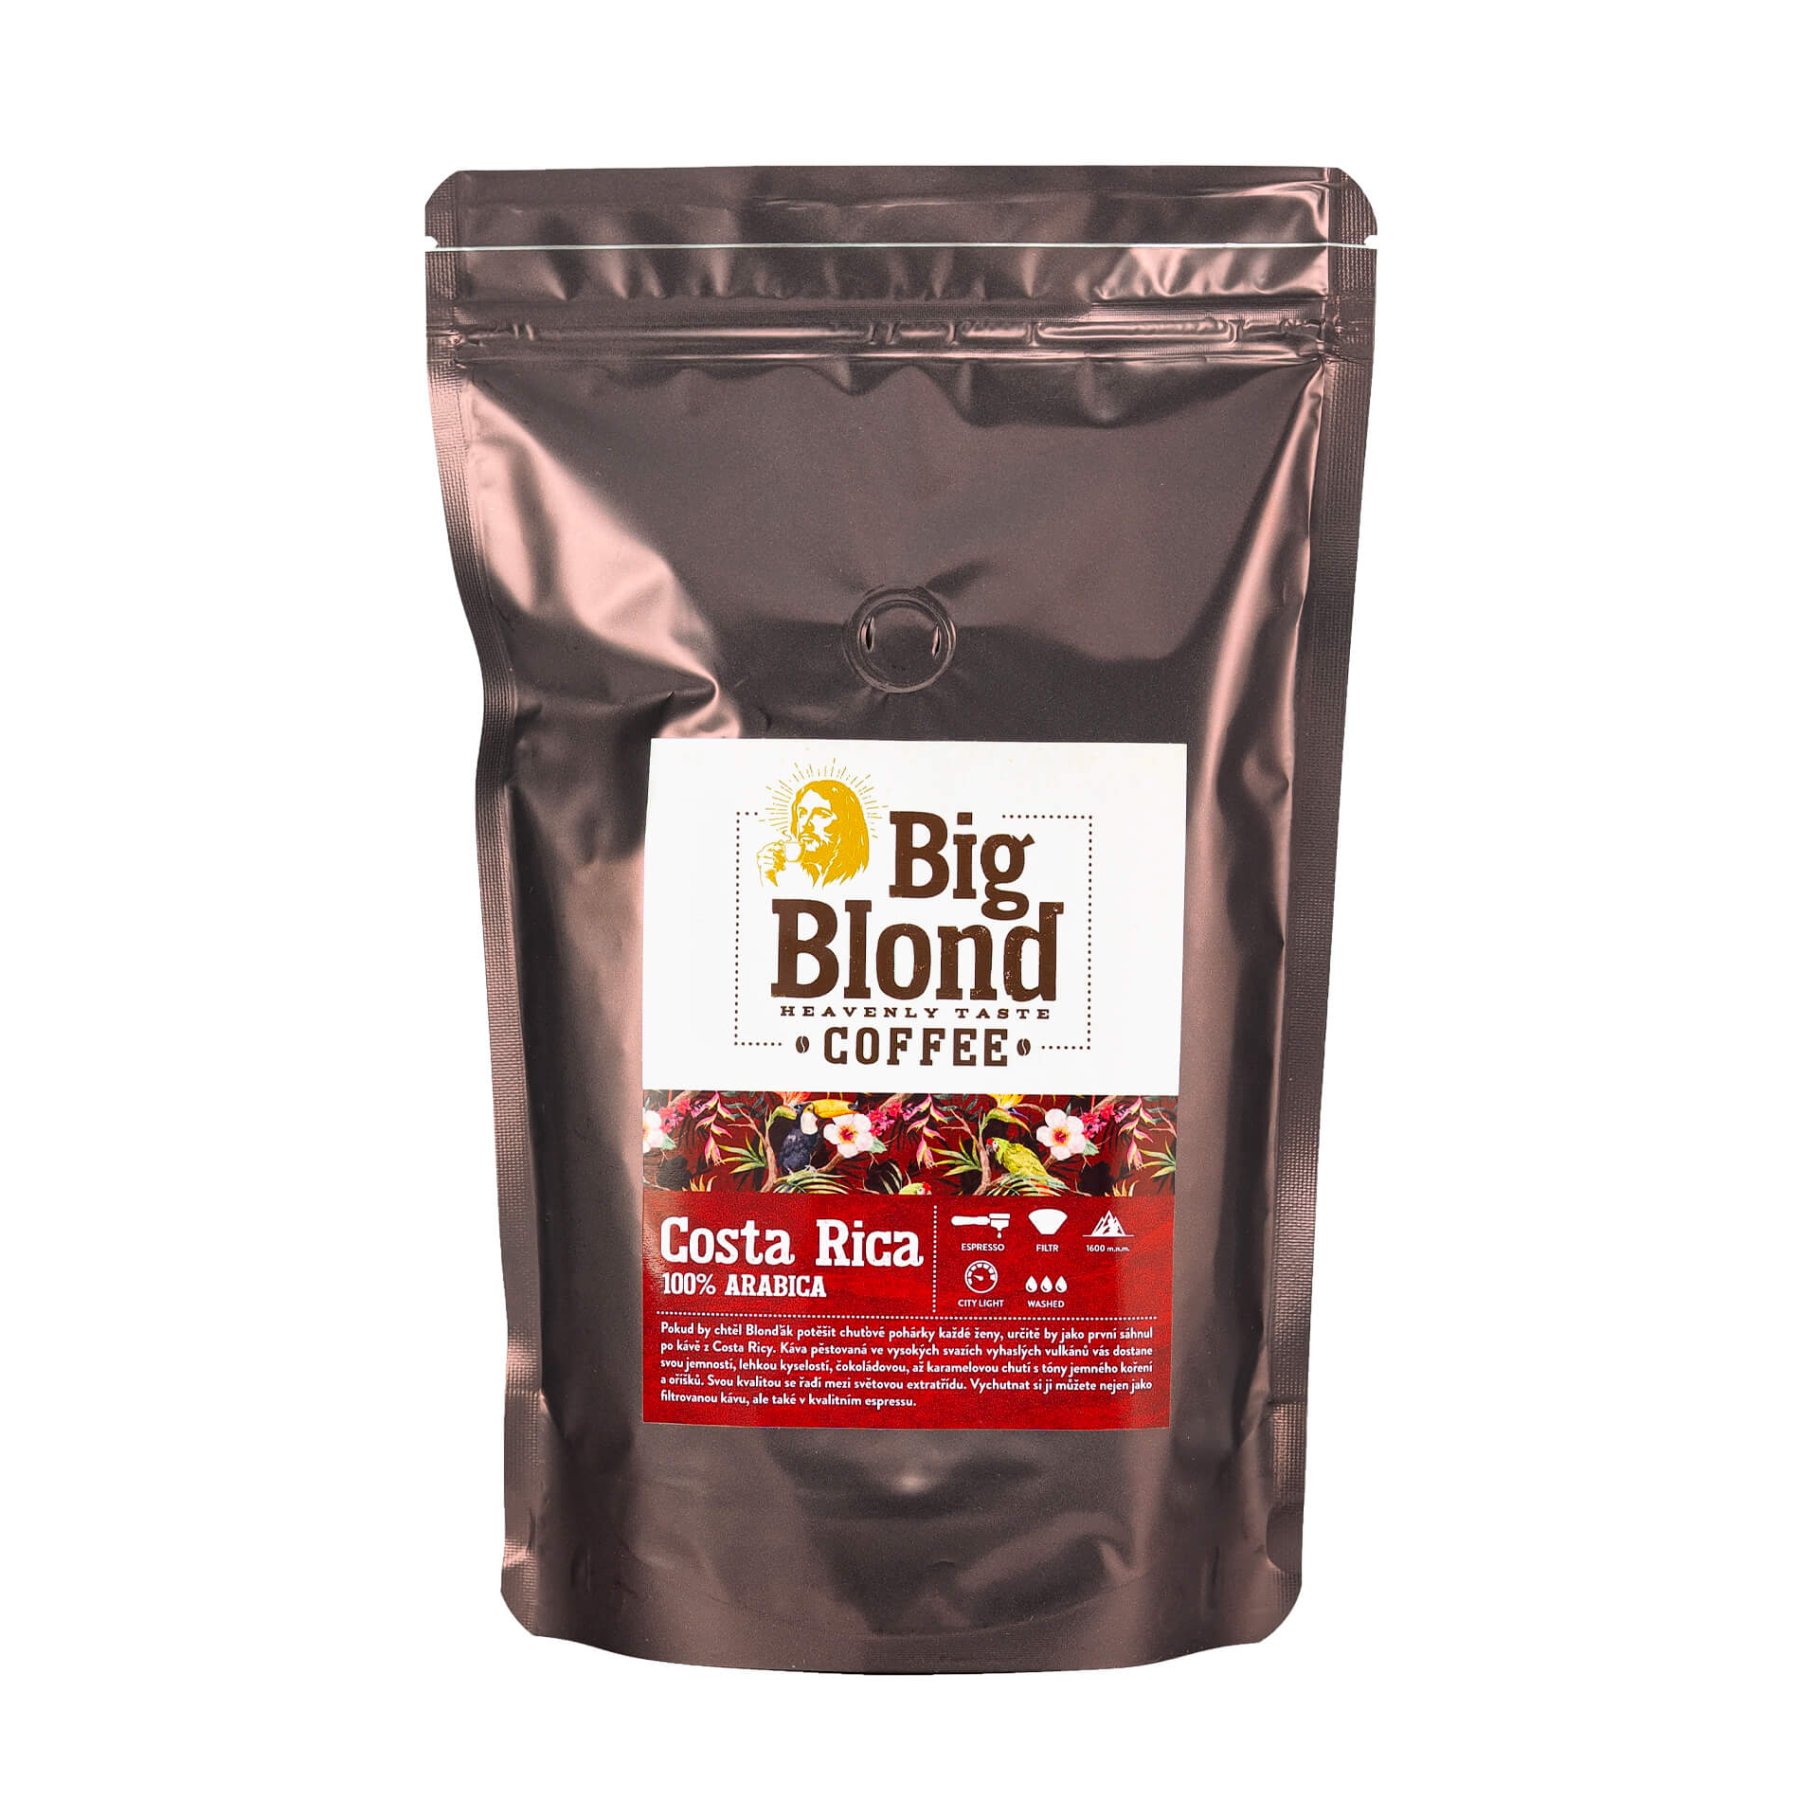 COSTA RICA Tarrazu San Rafael 100% arabica BIG BLOND COFFEE 500 g